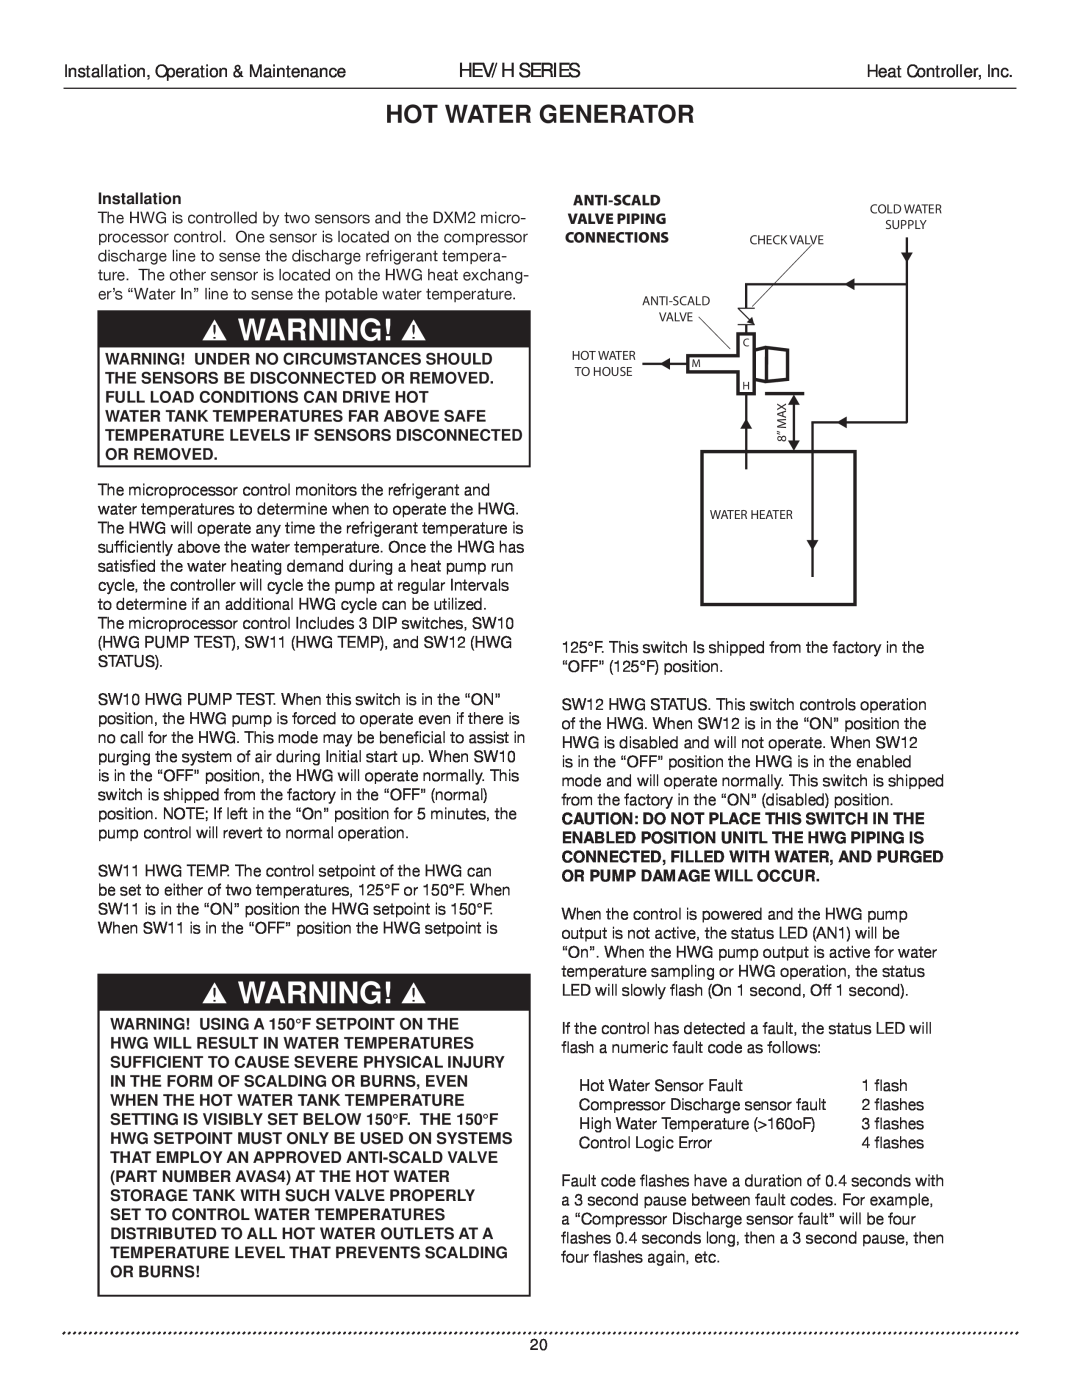 Heat Controller HEV/H manual Hot Water Generator, Hev/H Series, Installation, Operation & Maintenance, Heat Controller, Inc 